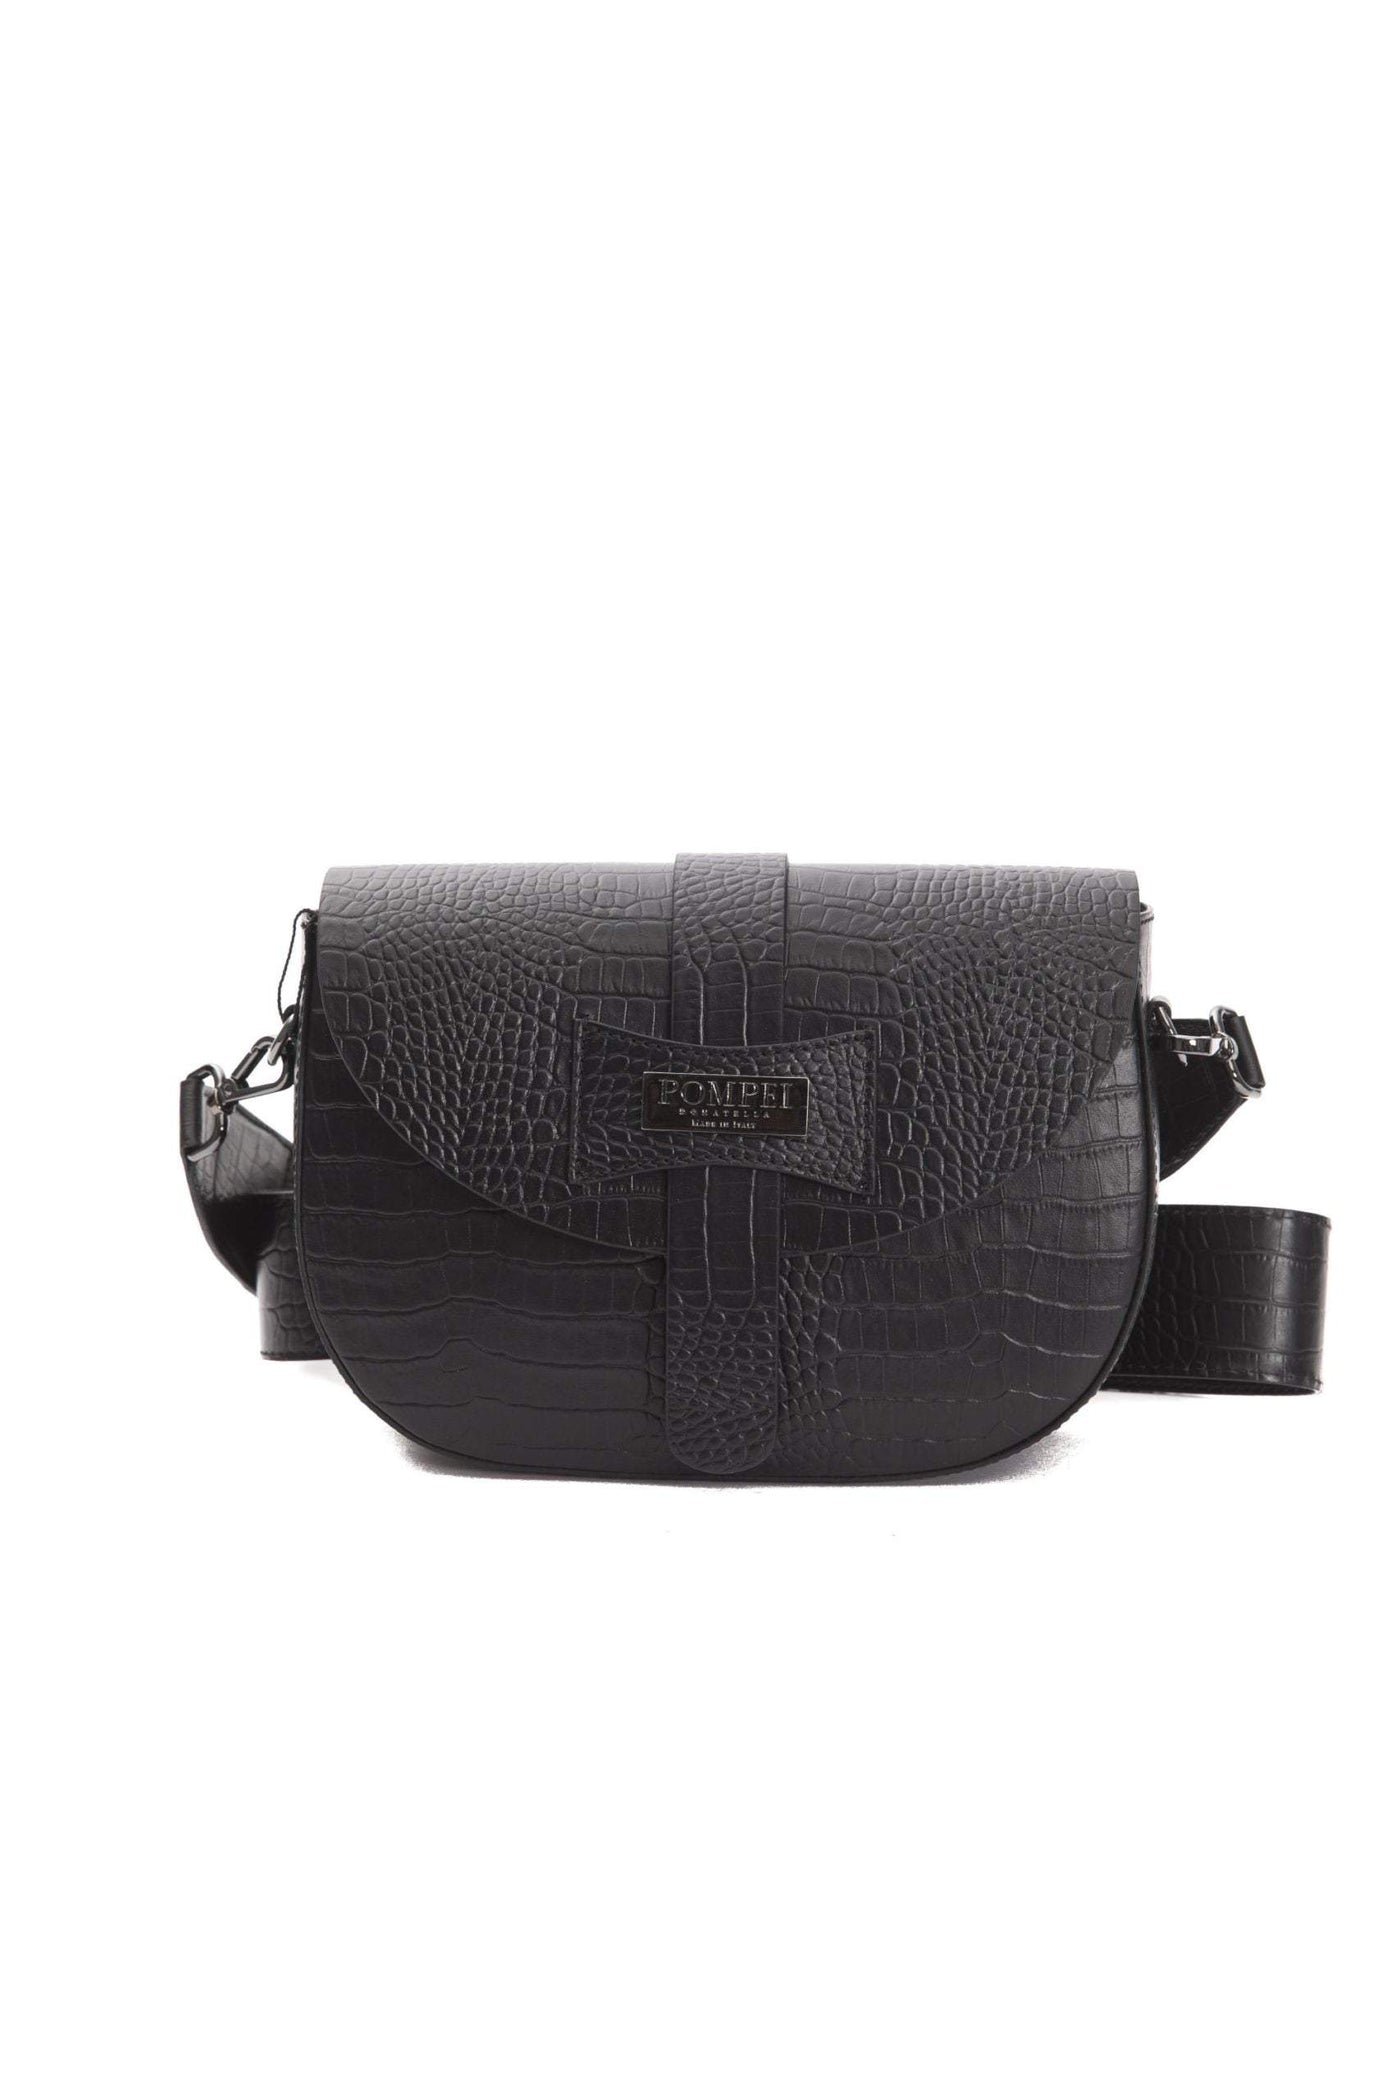 Pompei Donatella Black Leather Crossbody Bag Black, Crossbody Bags - Women - Bags, feed-1, Pompei Donatella at SEYMAYKA